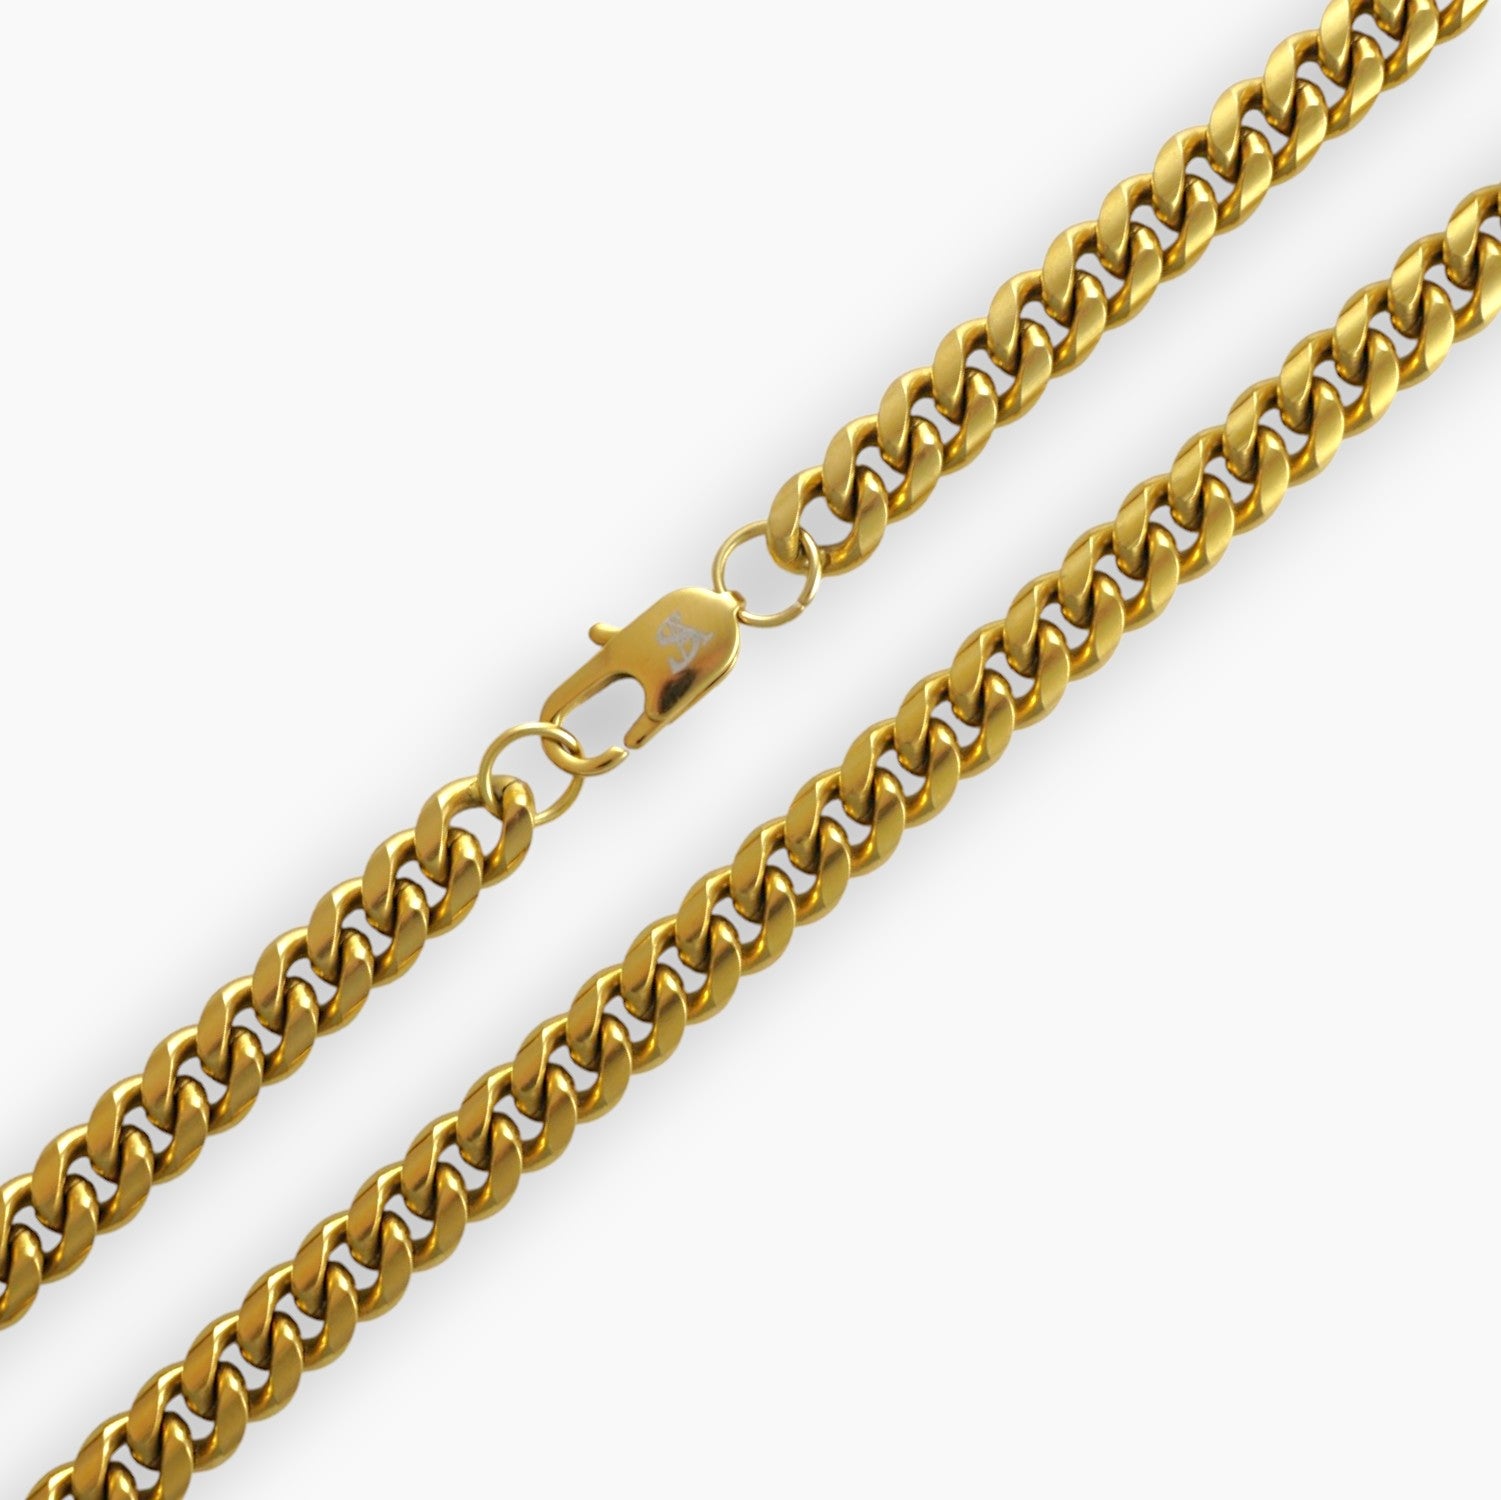 8mm gold cuban chain clasp